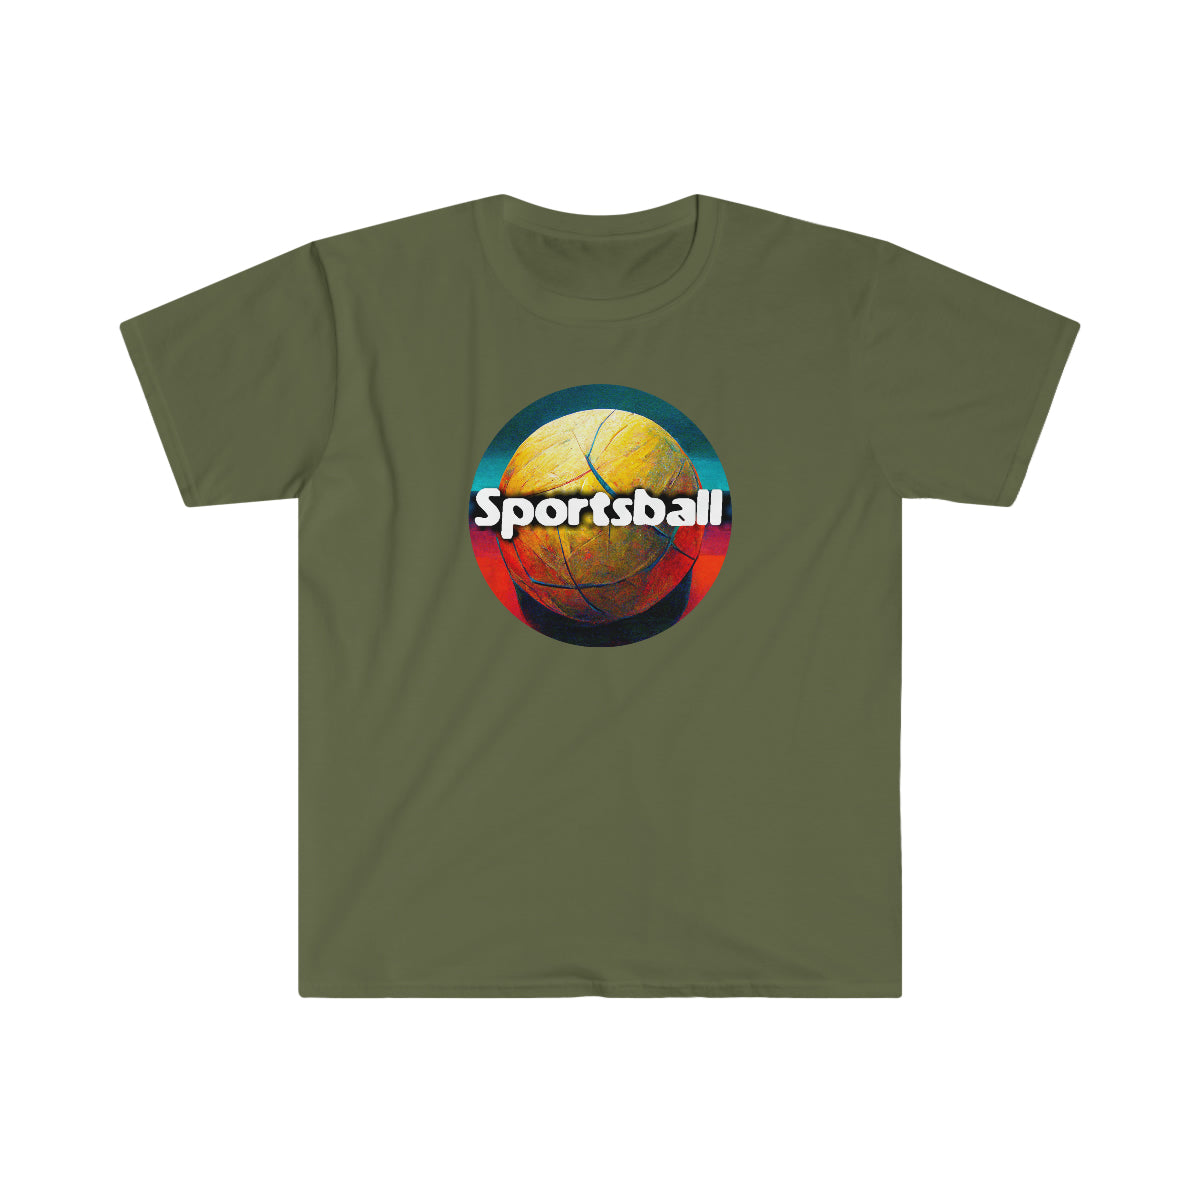 Sportsball - Unisex Softstyle T-Shirt